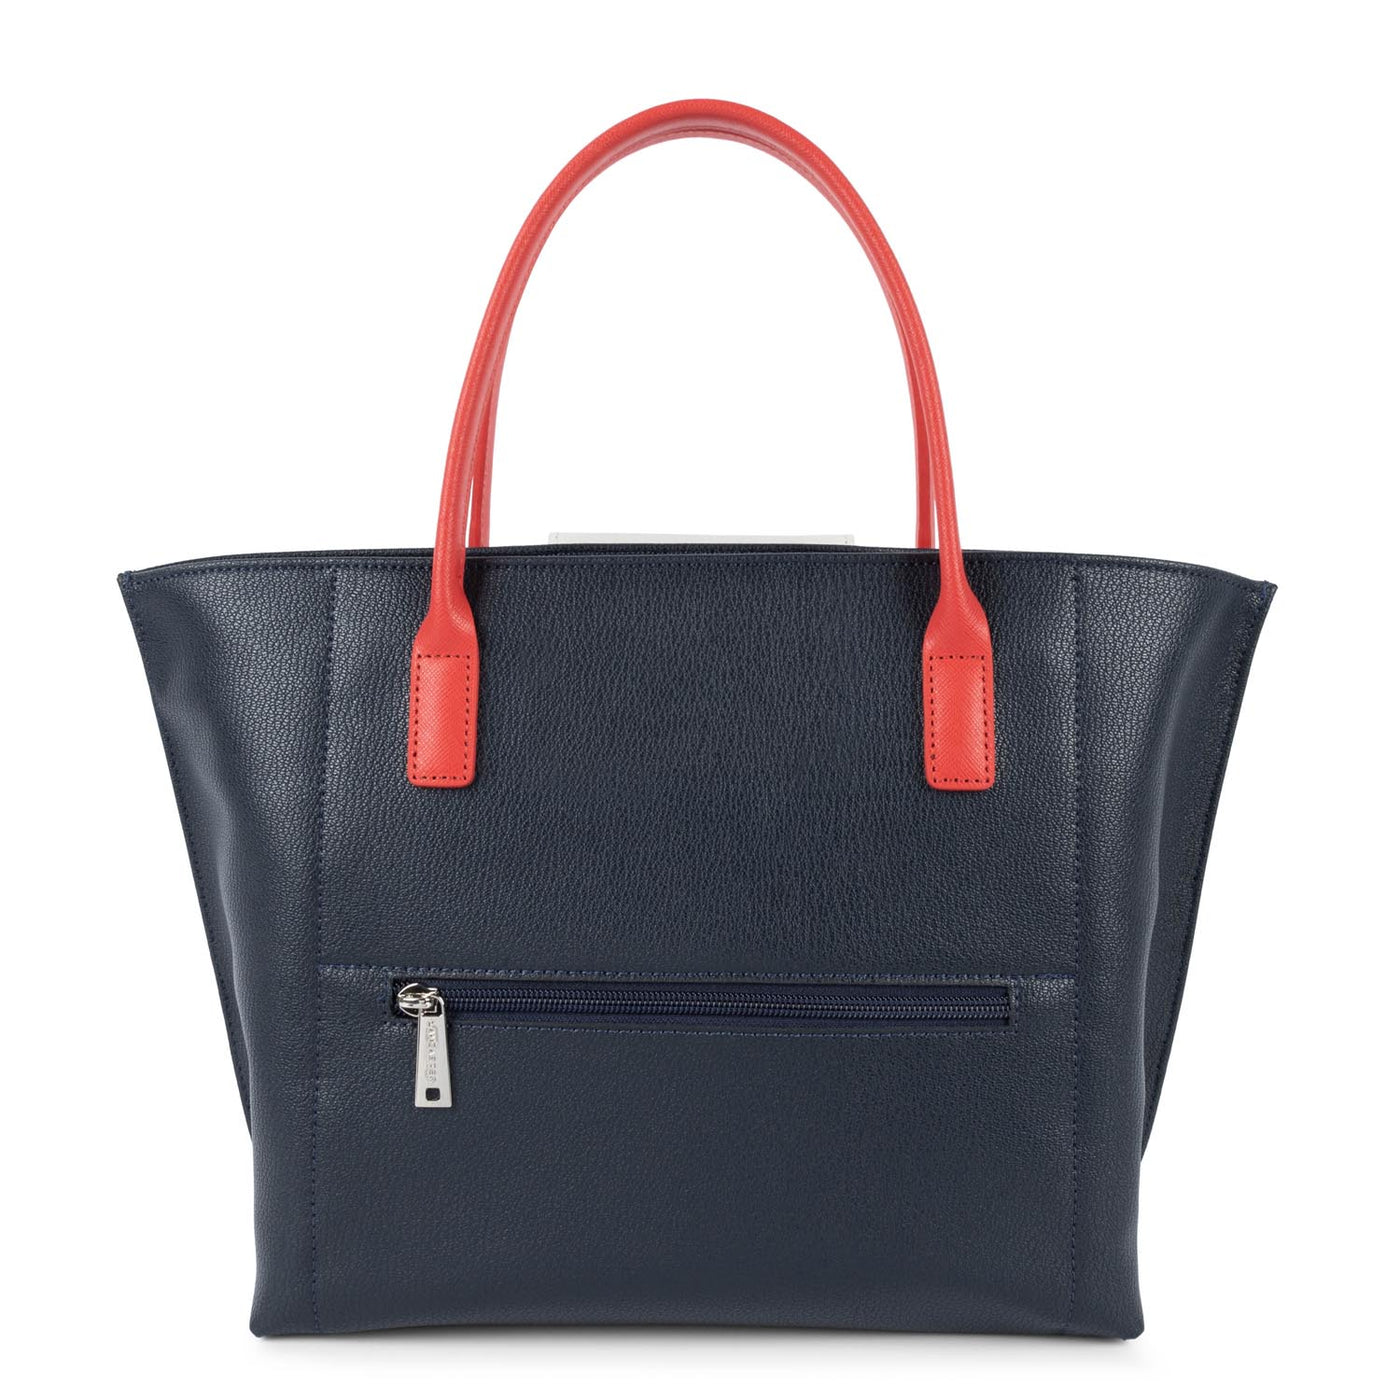 m handbag - maya #couleur_bleu-fonc-ivoire-corail